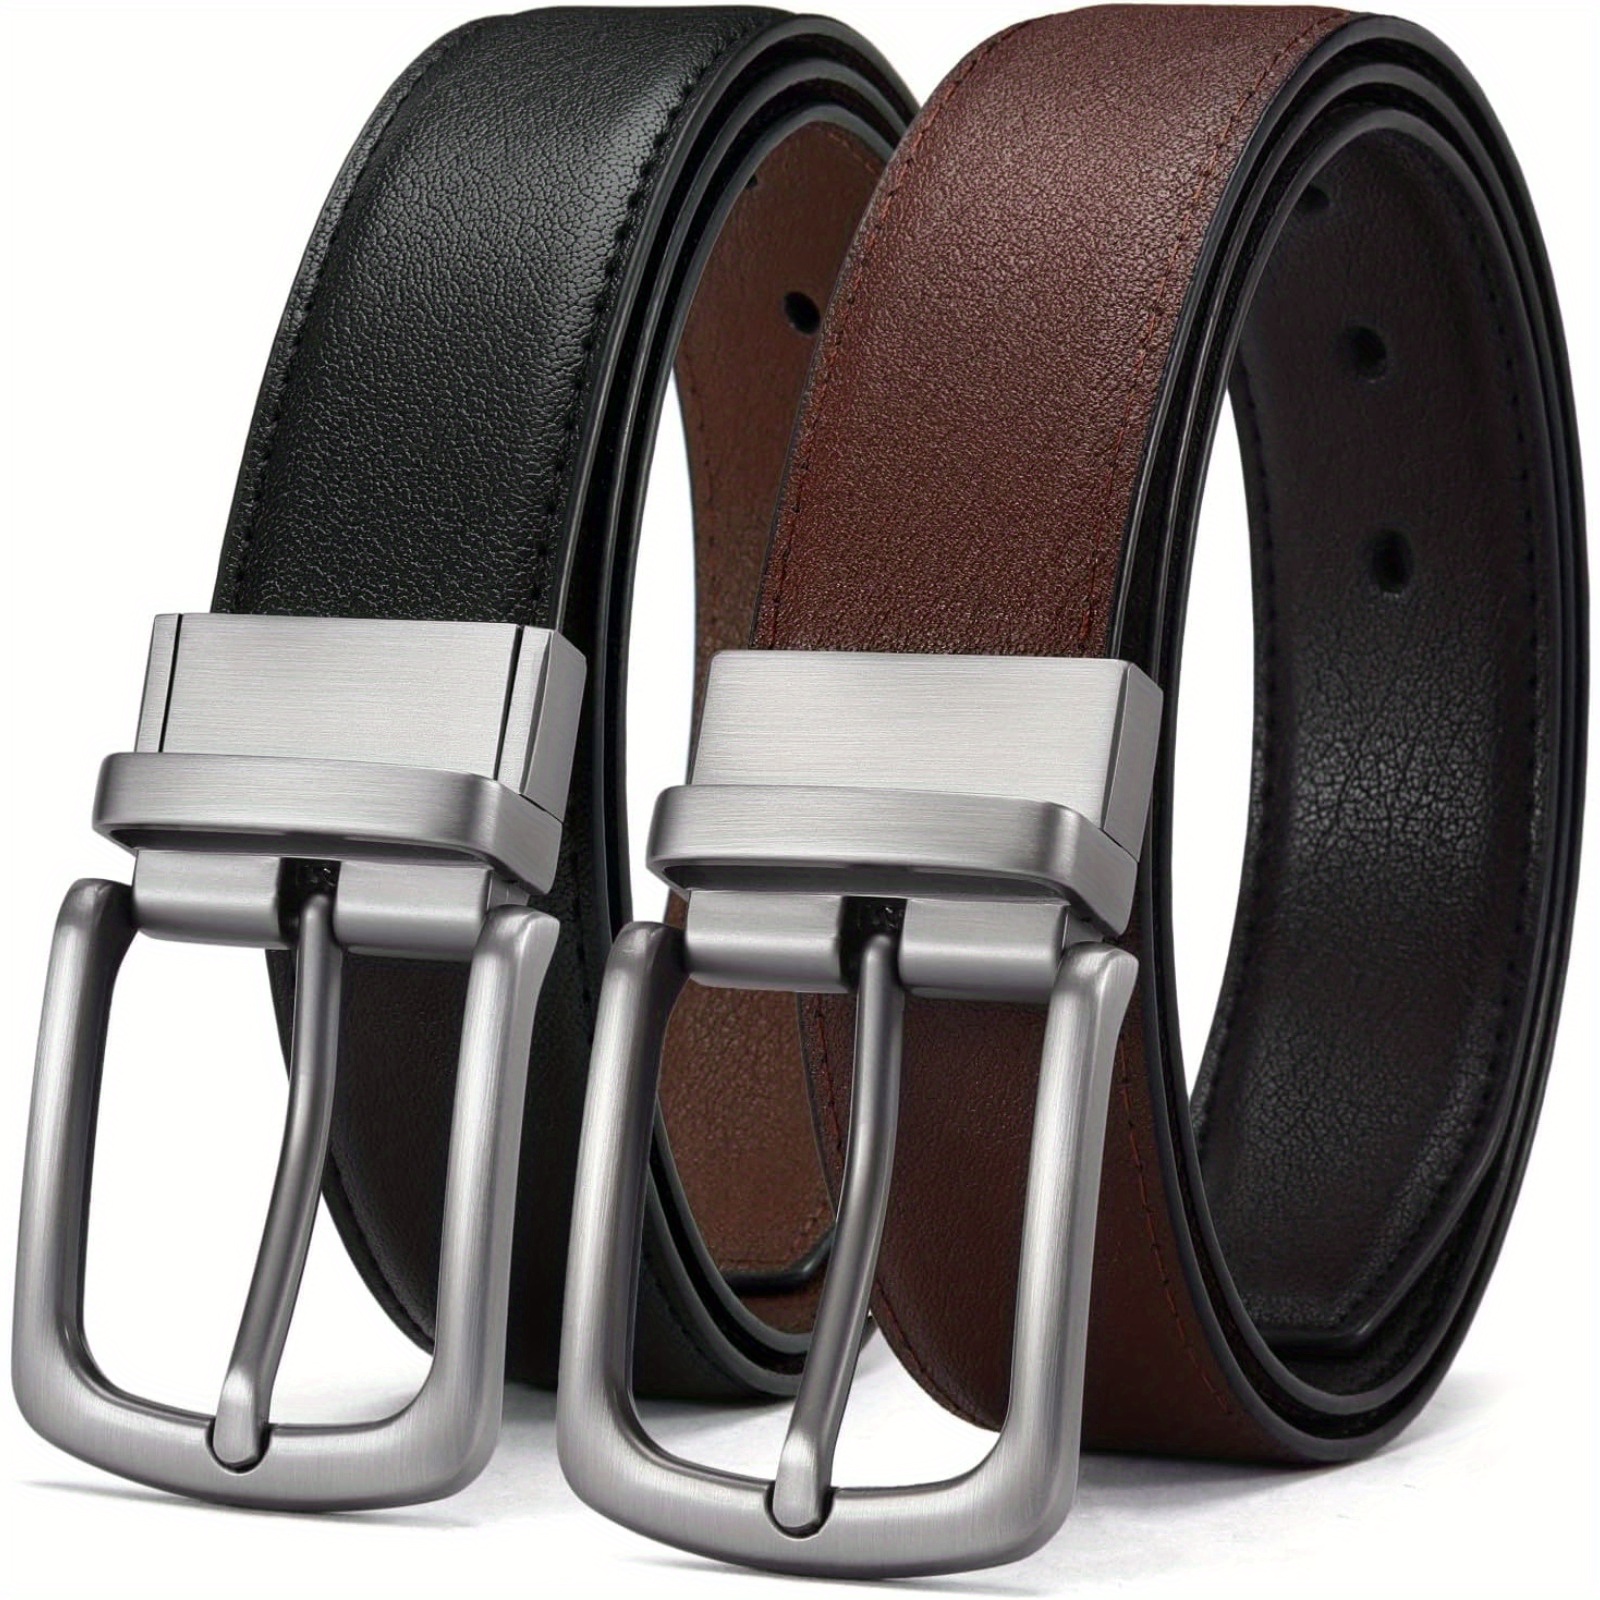 

Chaoren Couple Leather Reversible Belt For Men 1 3/8" For Dress Pants - 2 Styles In 1 Belt